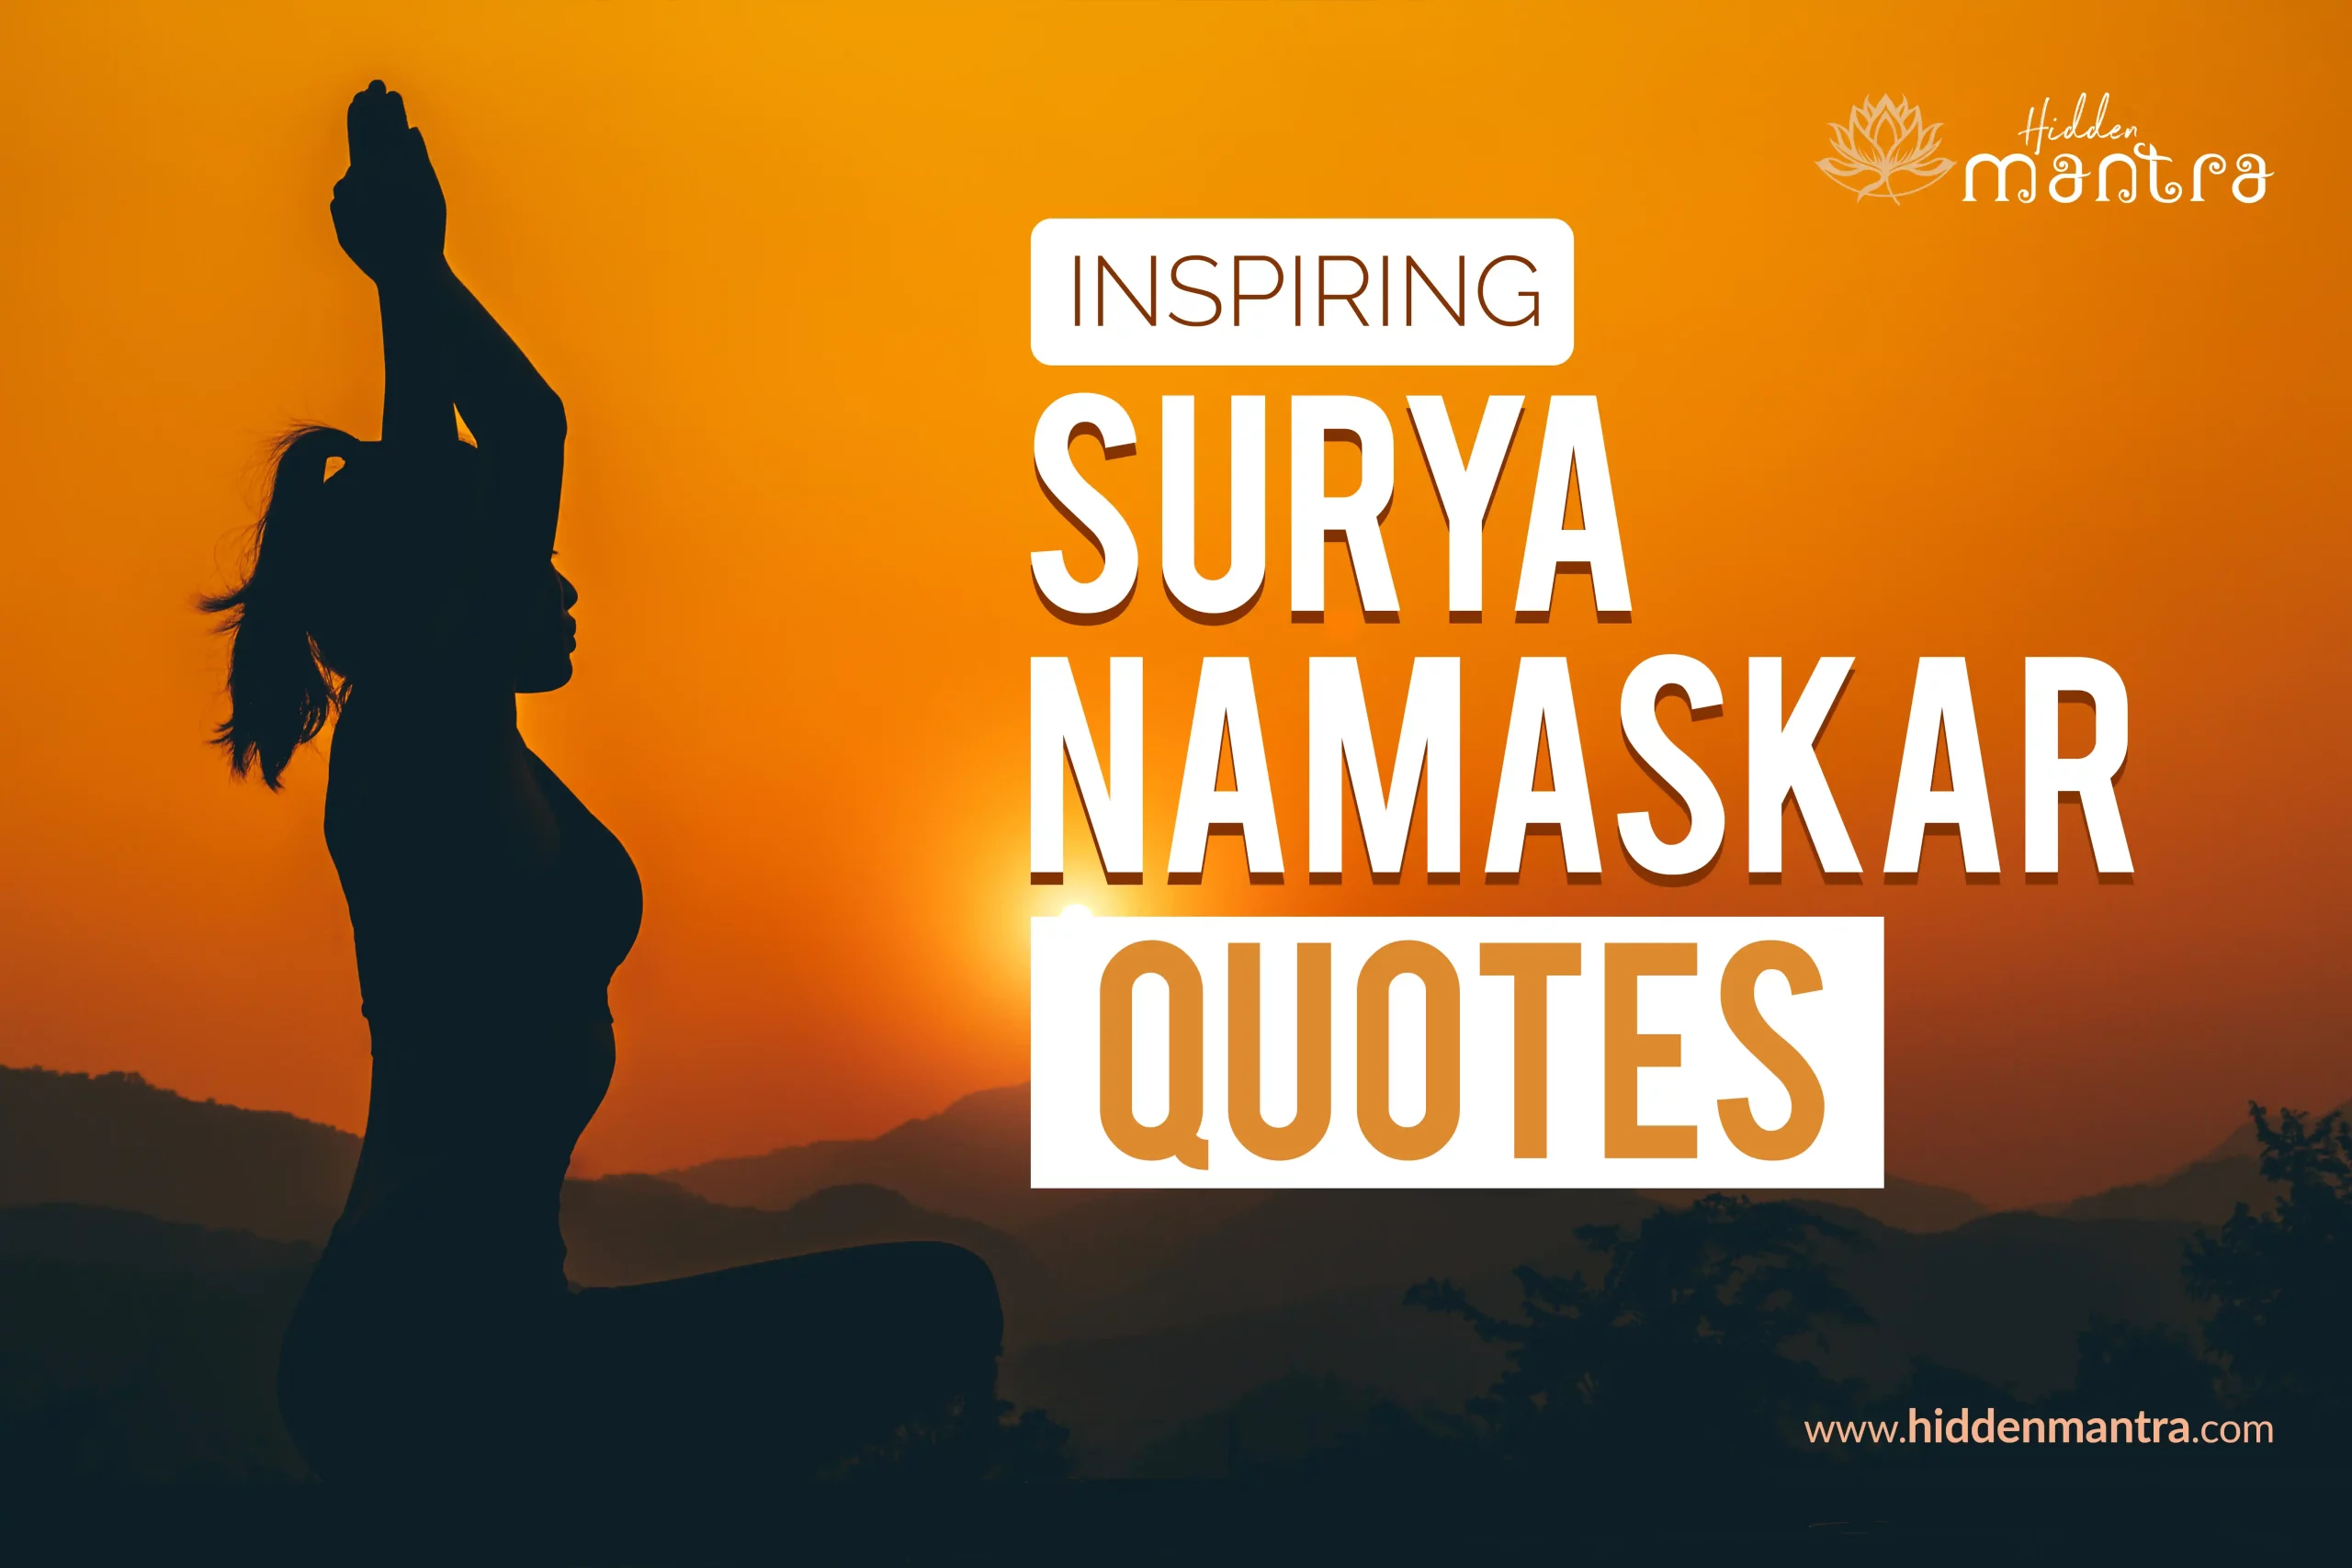 Surya Namaskara Quotes Hidden Mantra scaled